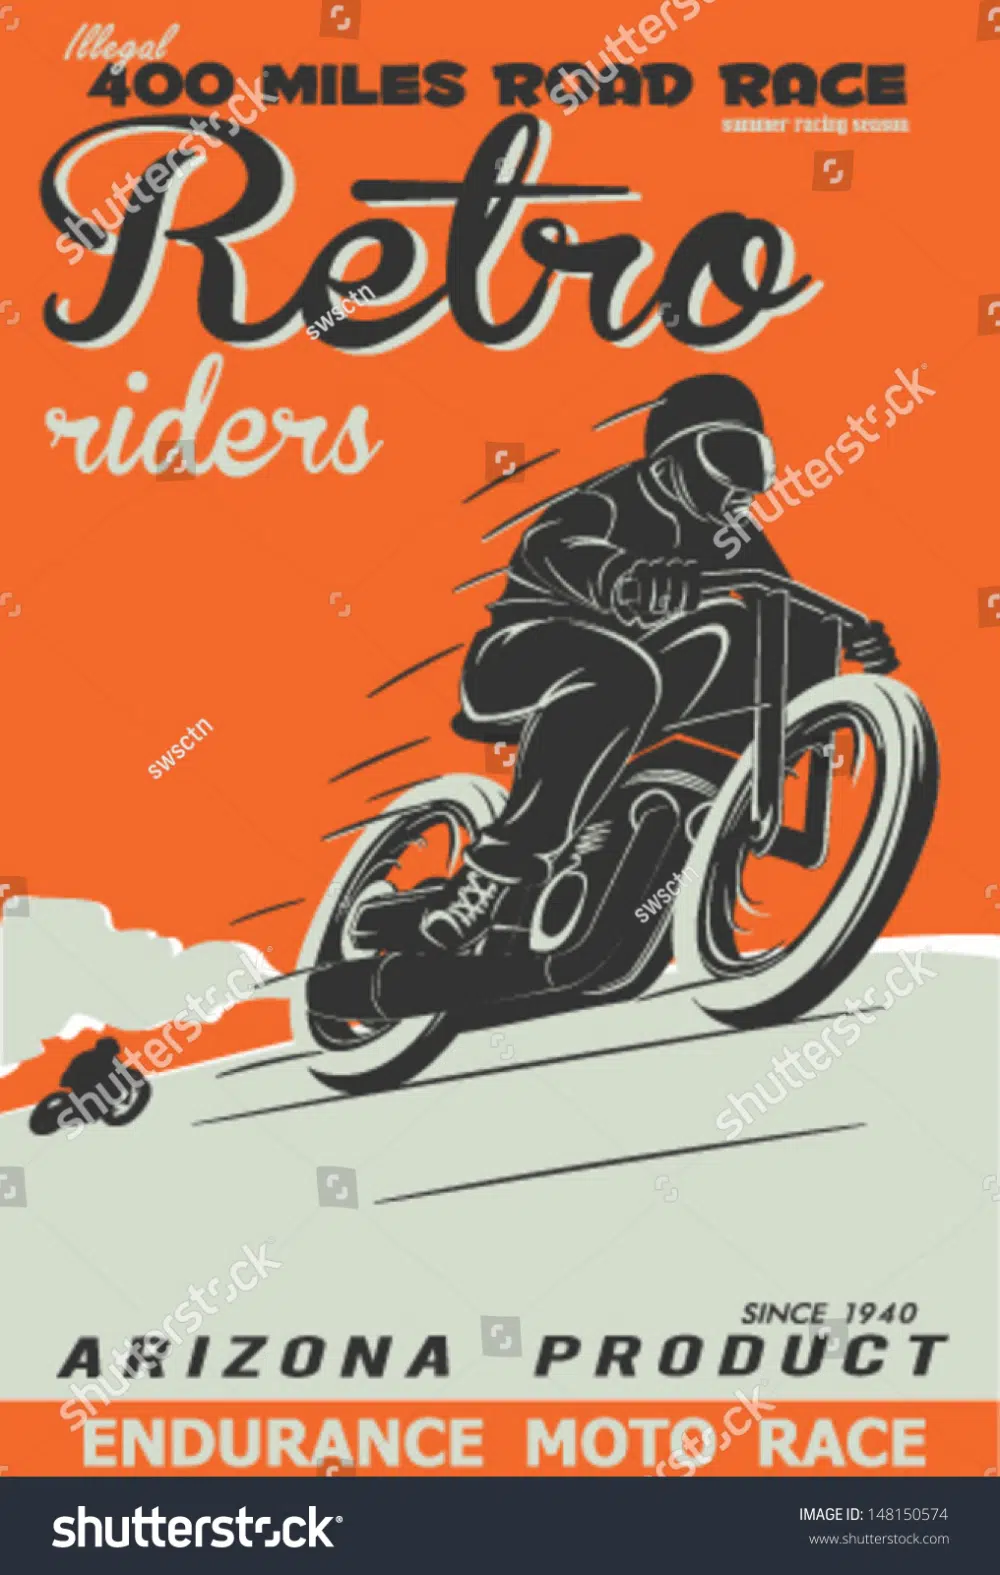 20 Free Retro & Vintage Vectors: Old School Endurance Moto Race Poster